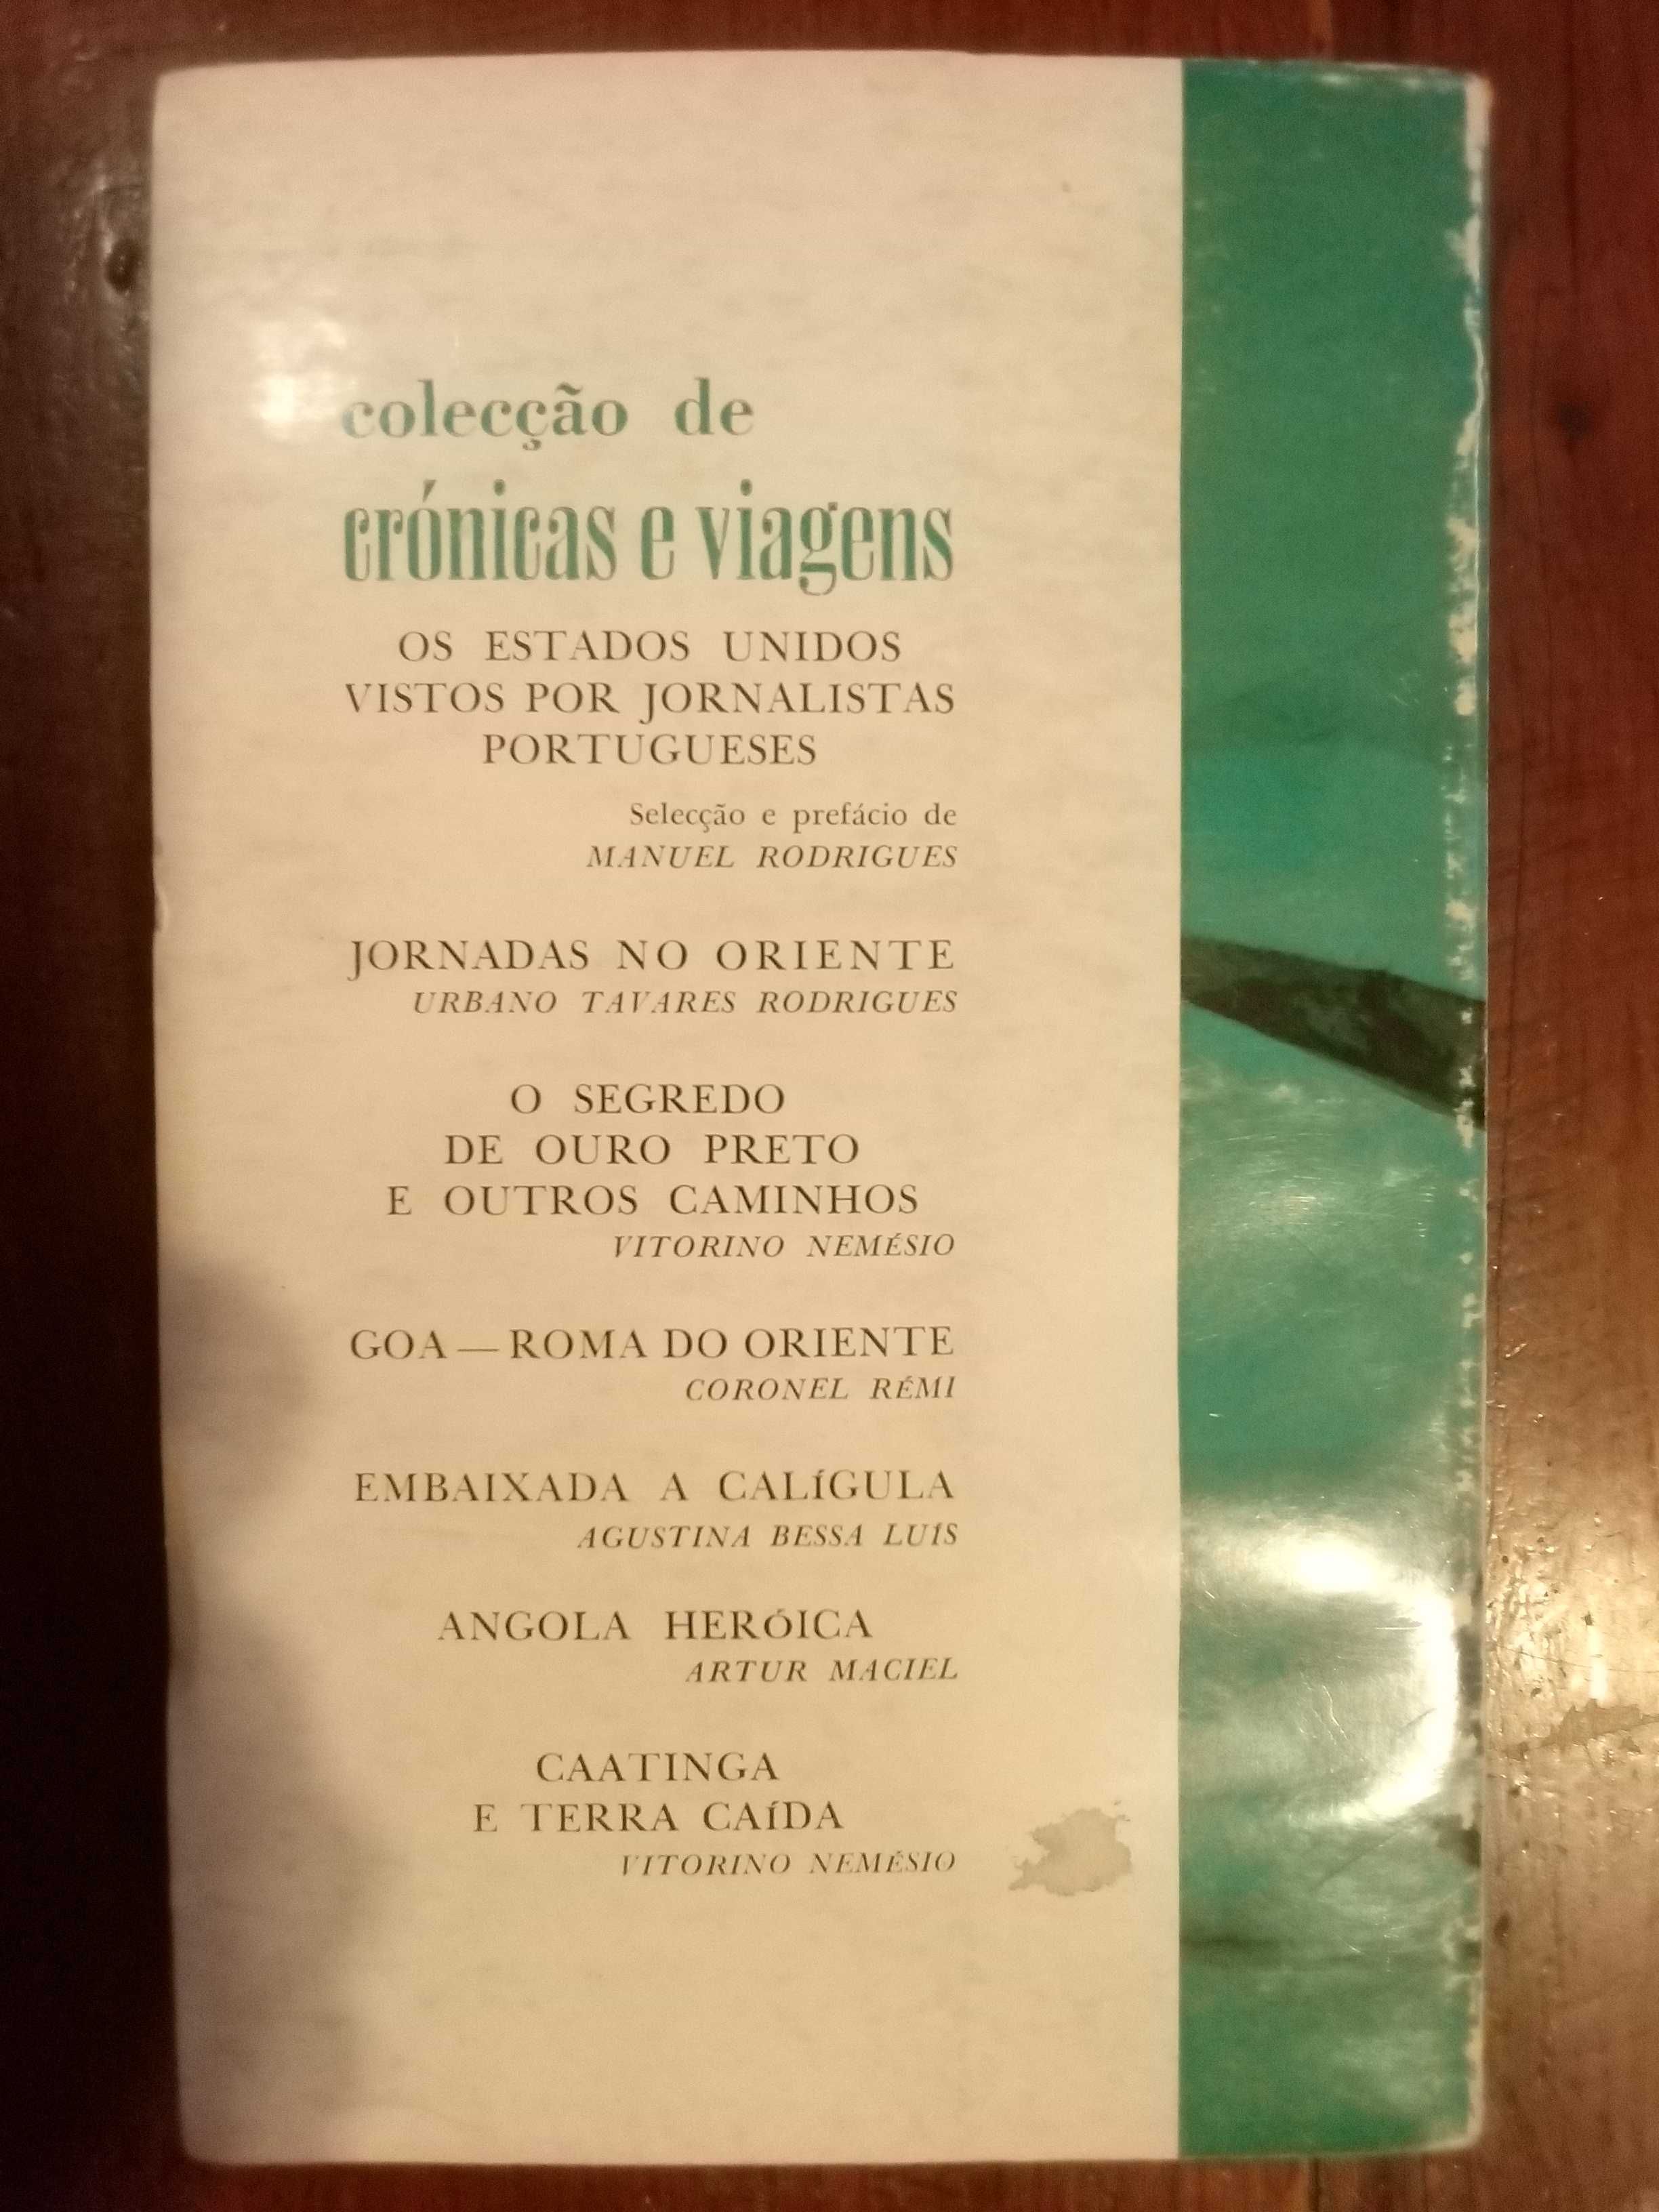 Vitorino Nemésio - Caatinga e terra caída [1.ª ed.]